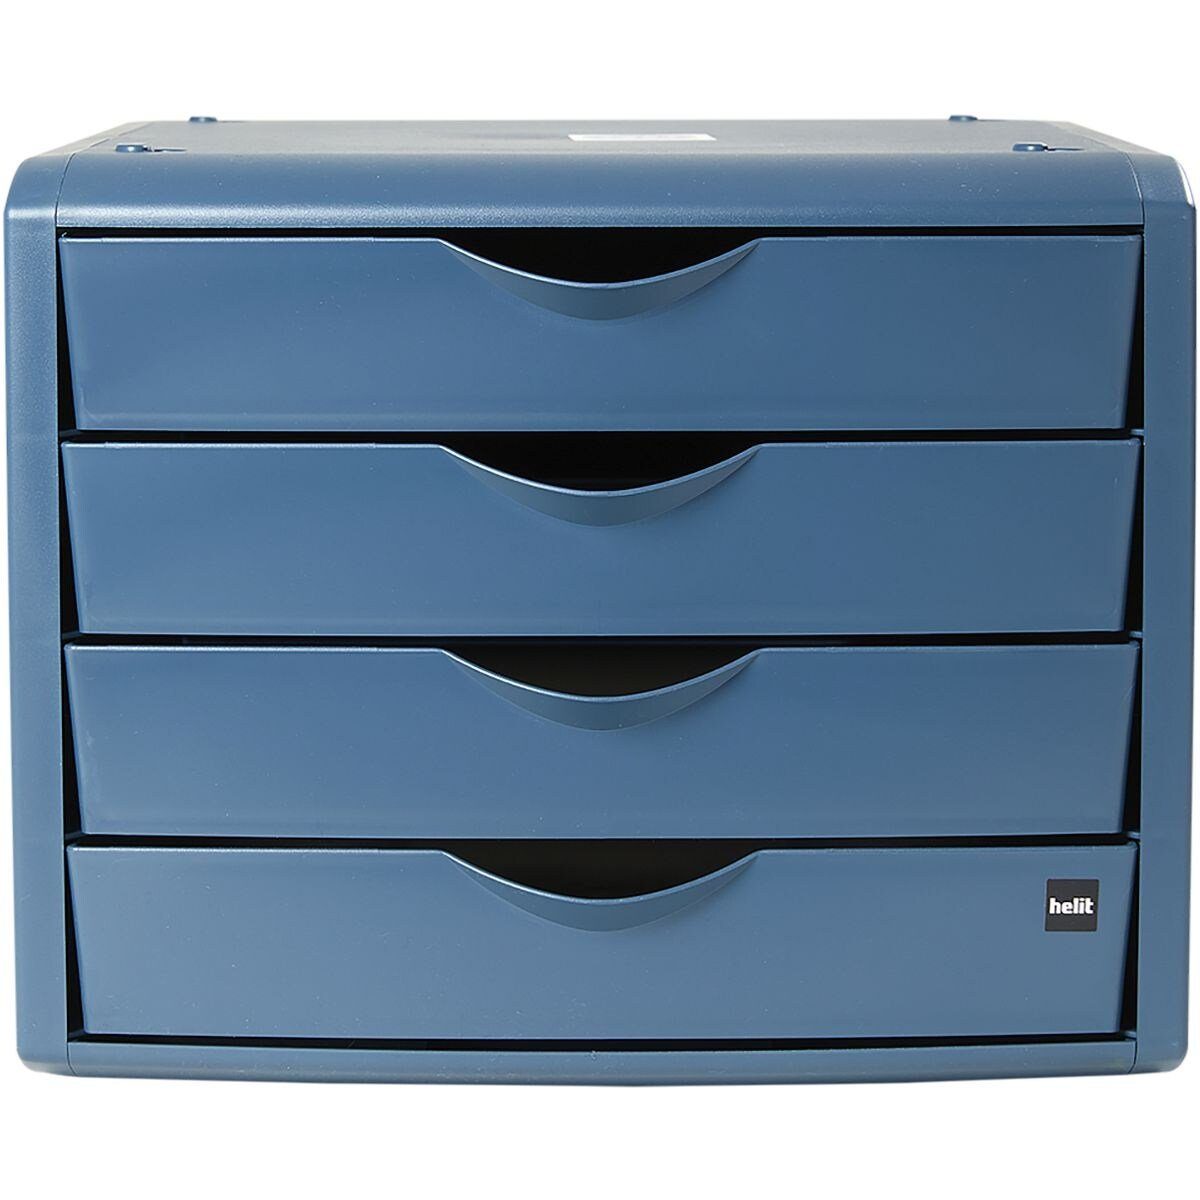 HELIT Schubladenbox the 4 Schubladen, mit Recycling-Kunststoff stapelbar, geschlossen, green blau chameleon